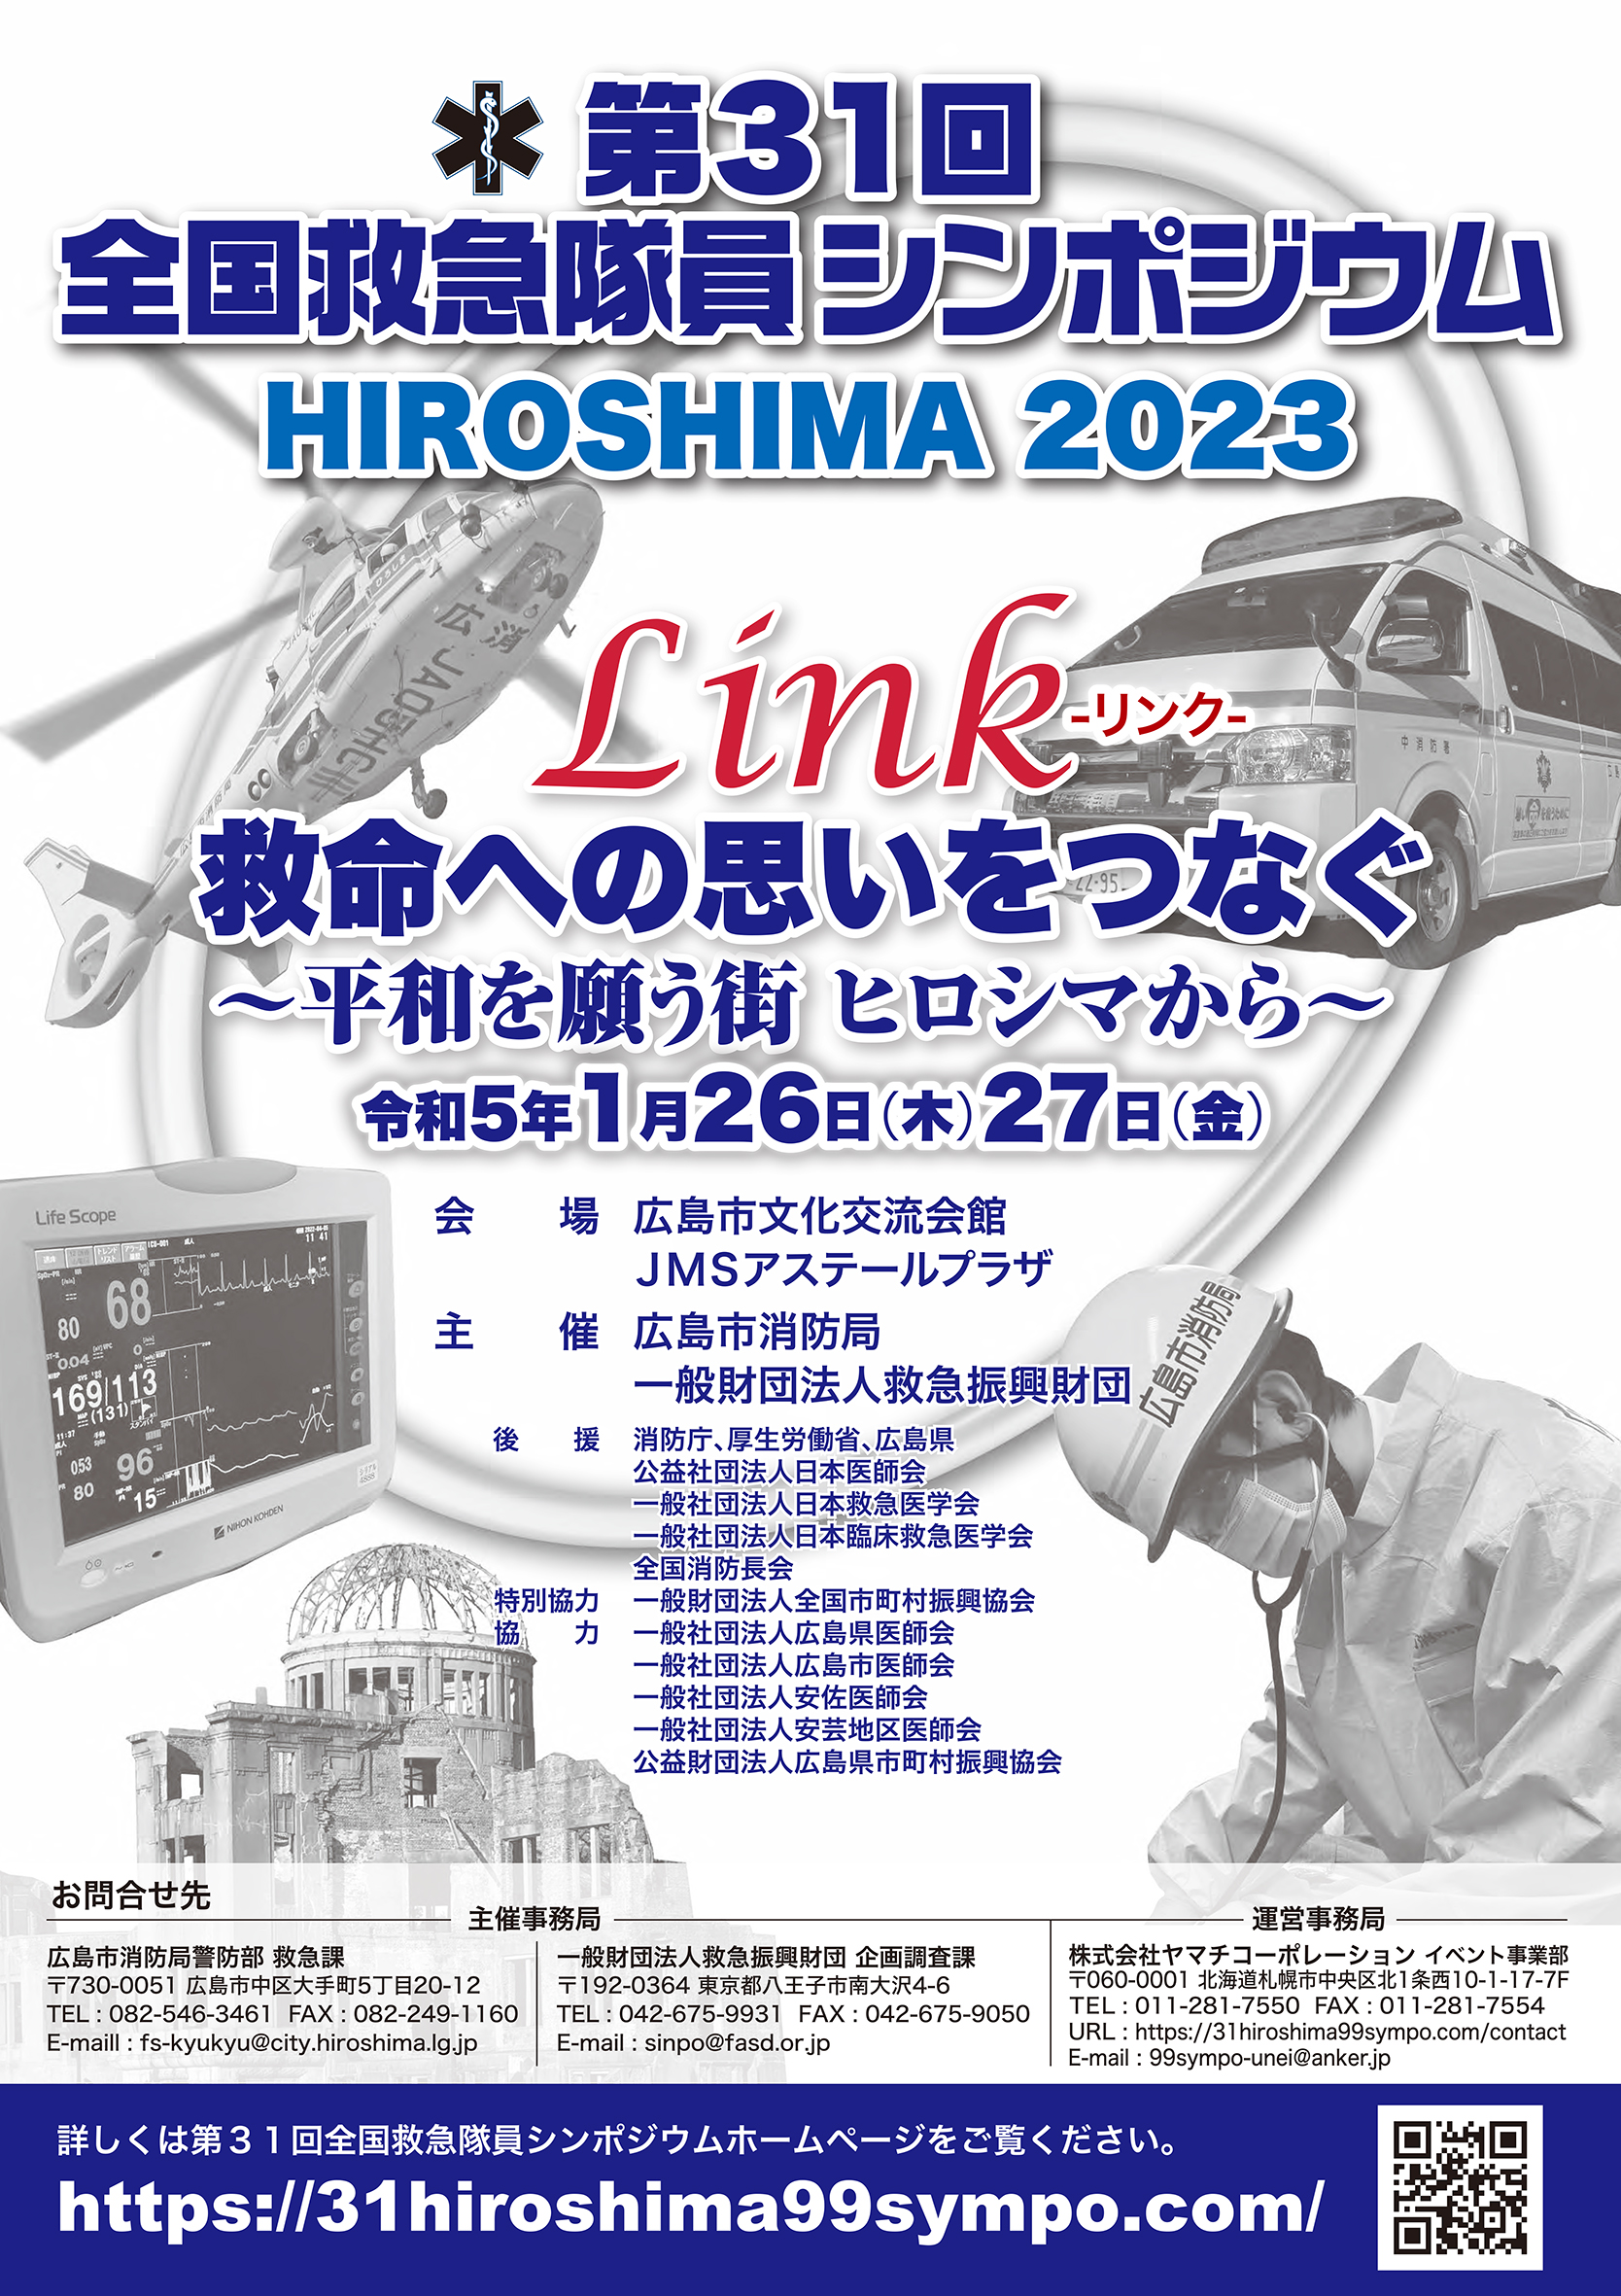 https://smart119.biz/news/images/99sympo_hiroshima_poster0805-3ol.jpg